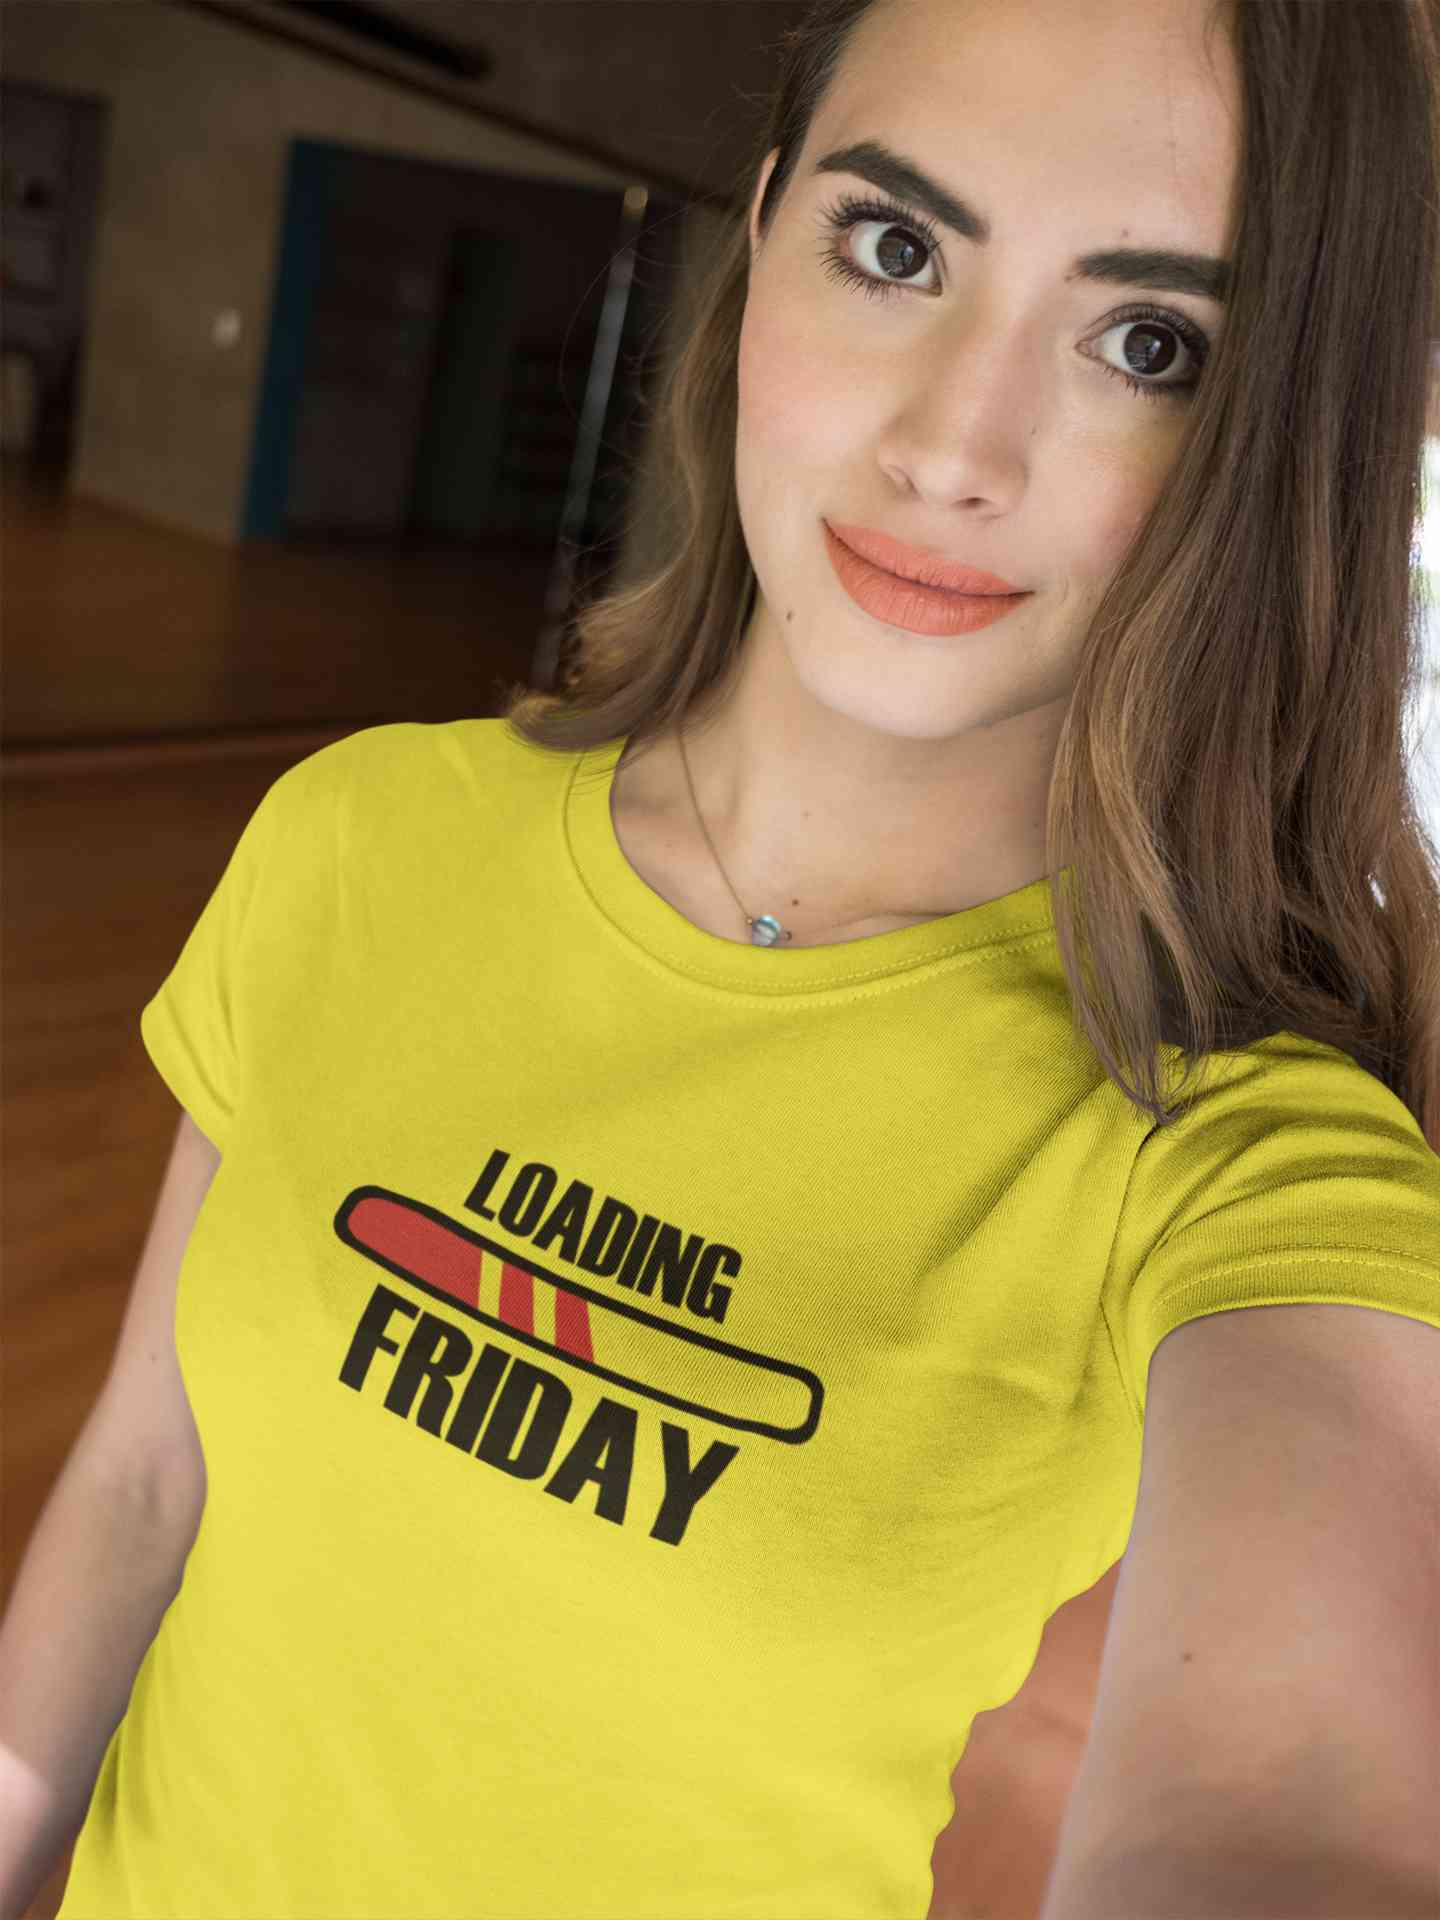 Loading Friday Women Half Sleeves T-shirt- FunkyTeesClub